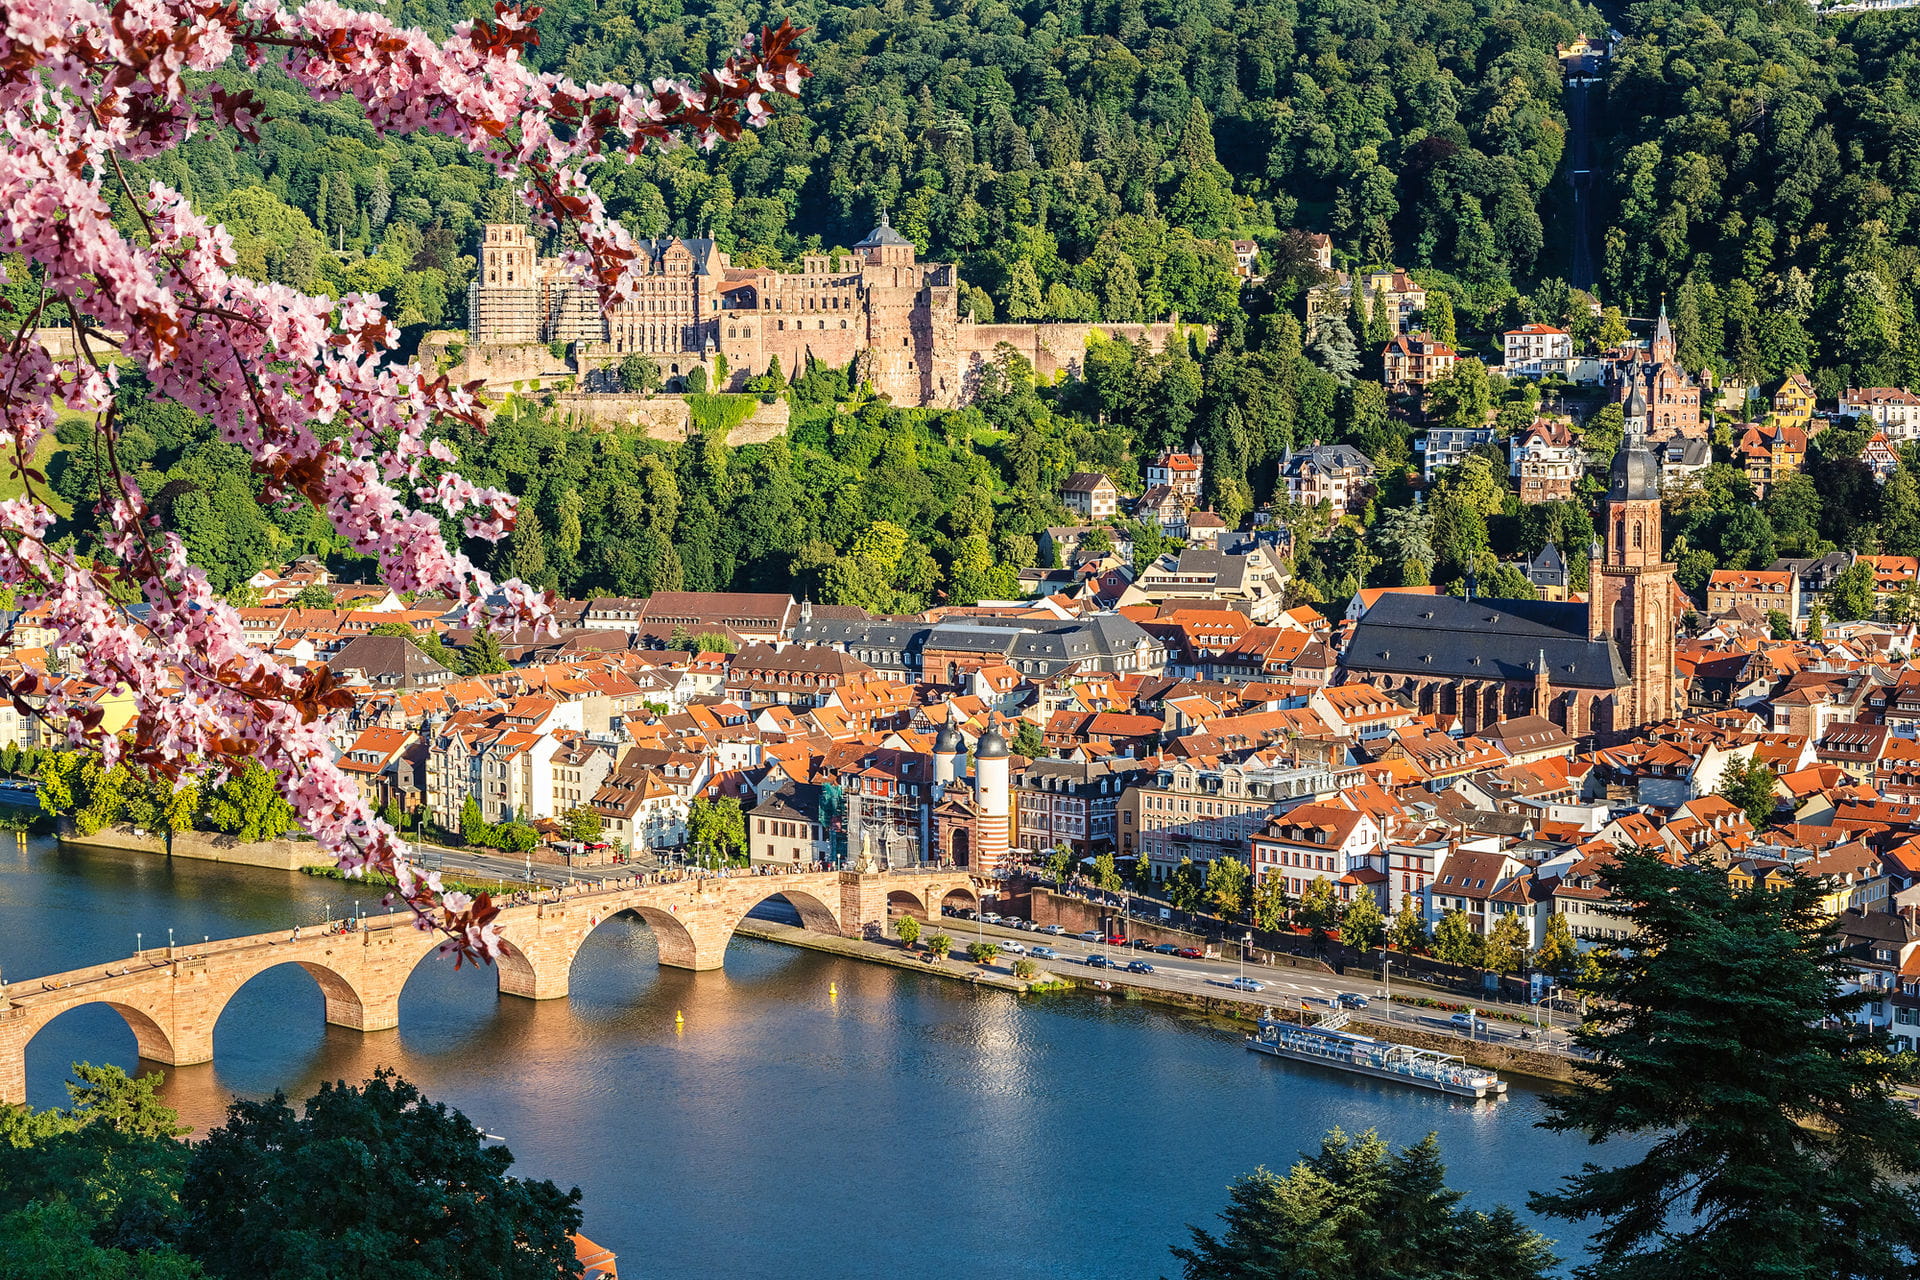 High quality hoto of Heidelberg - Germany